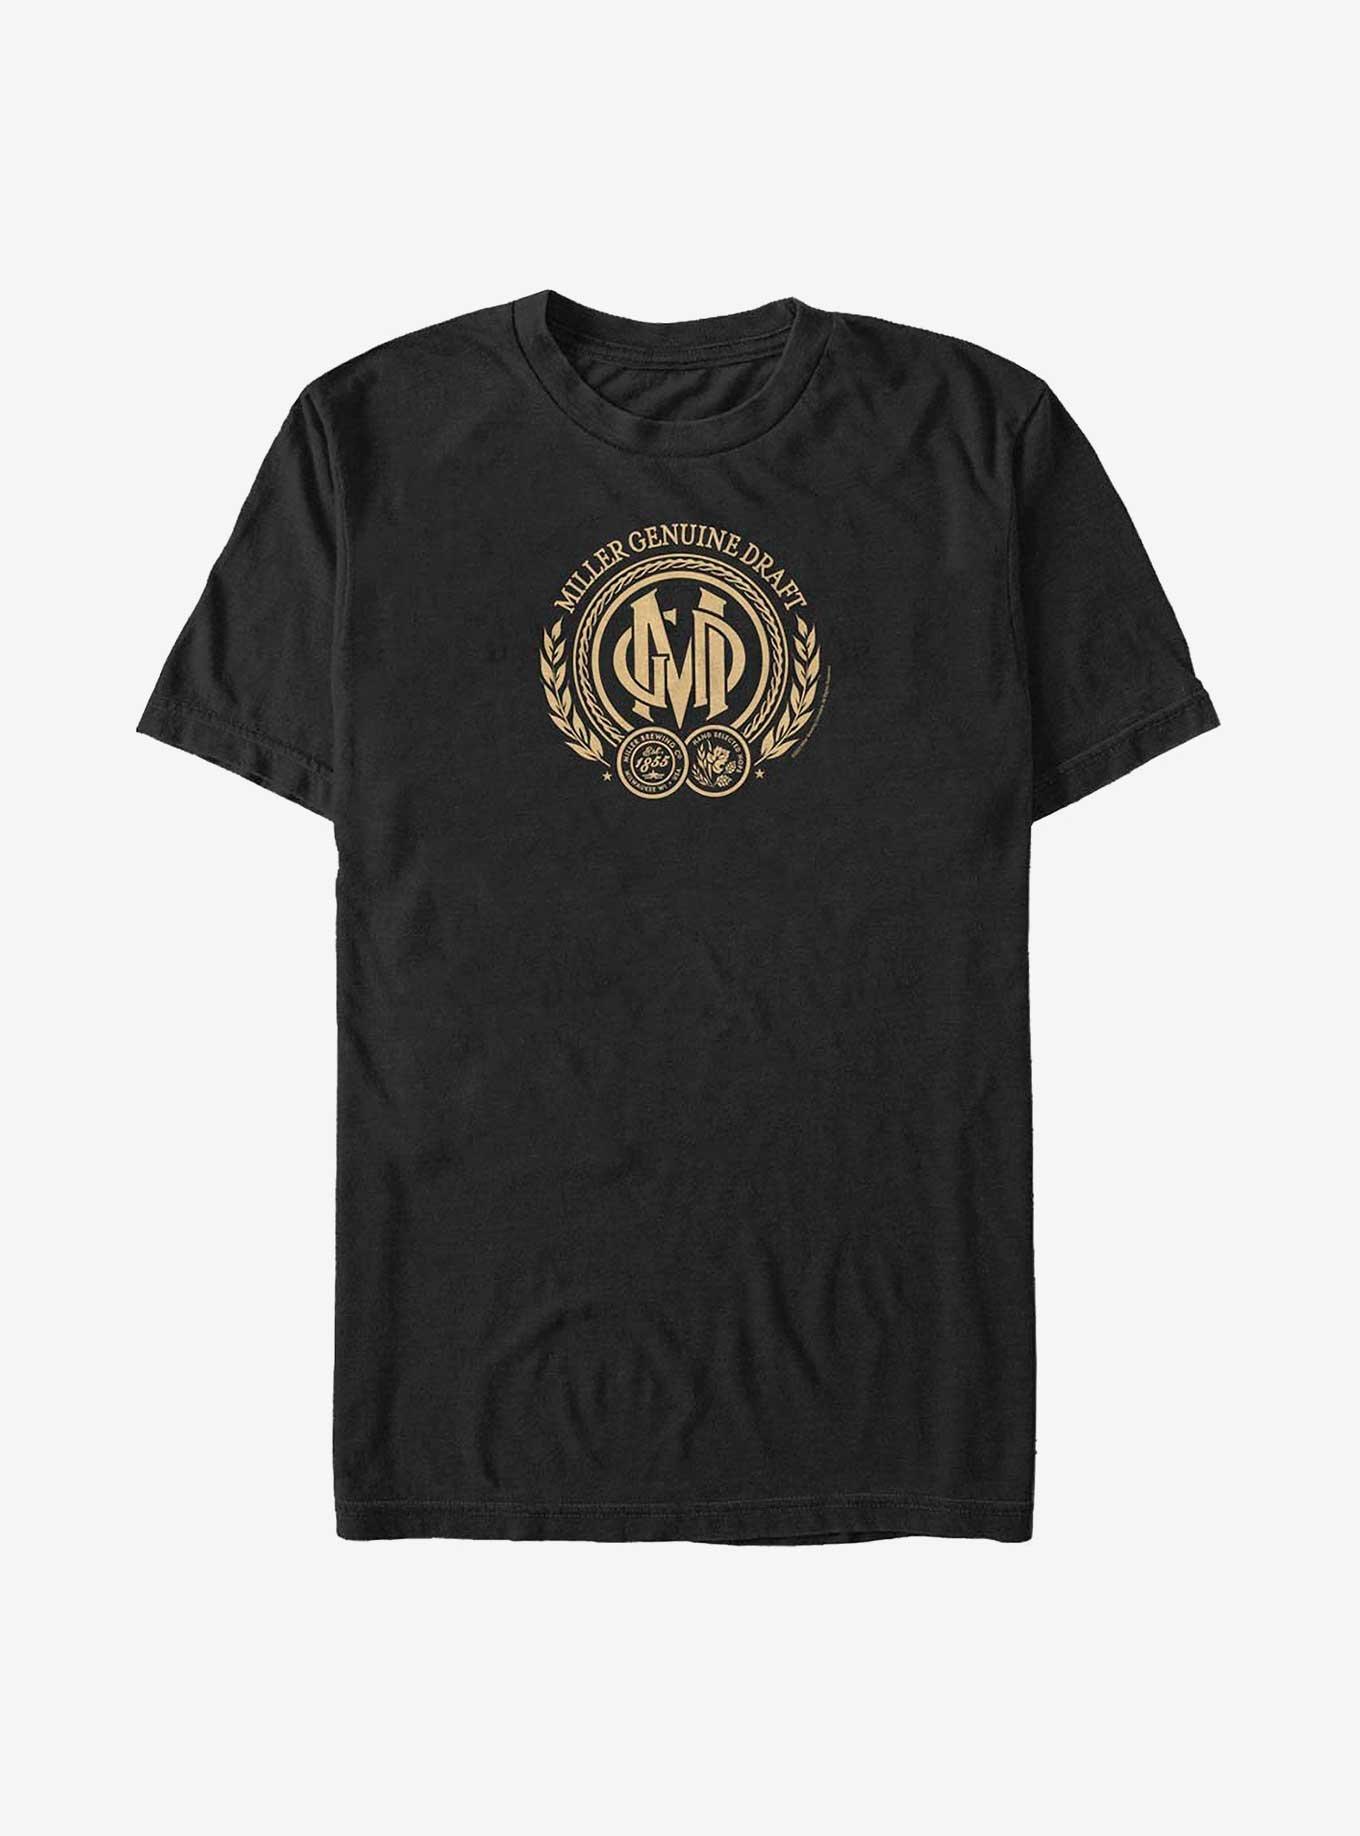 Coors Miller Genuine Draft Seal T-Shirt, , hi-res